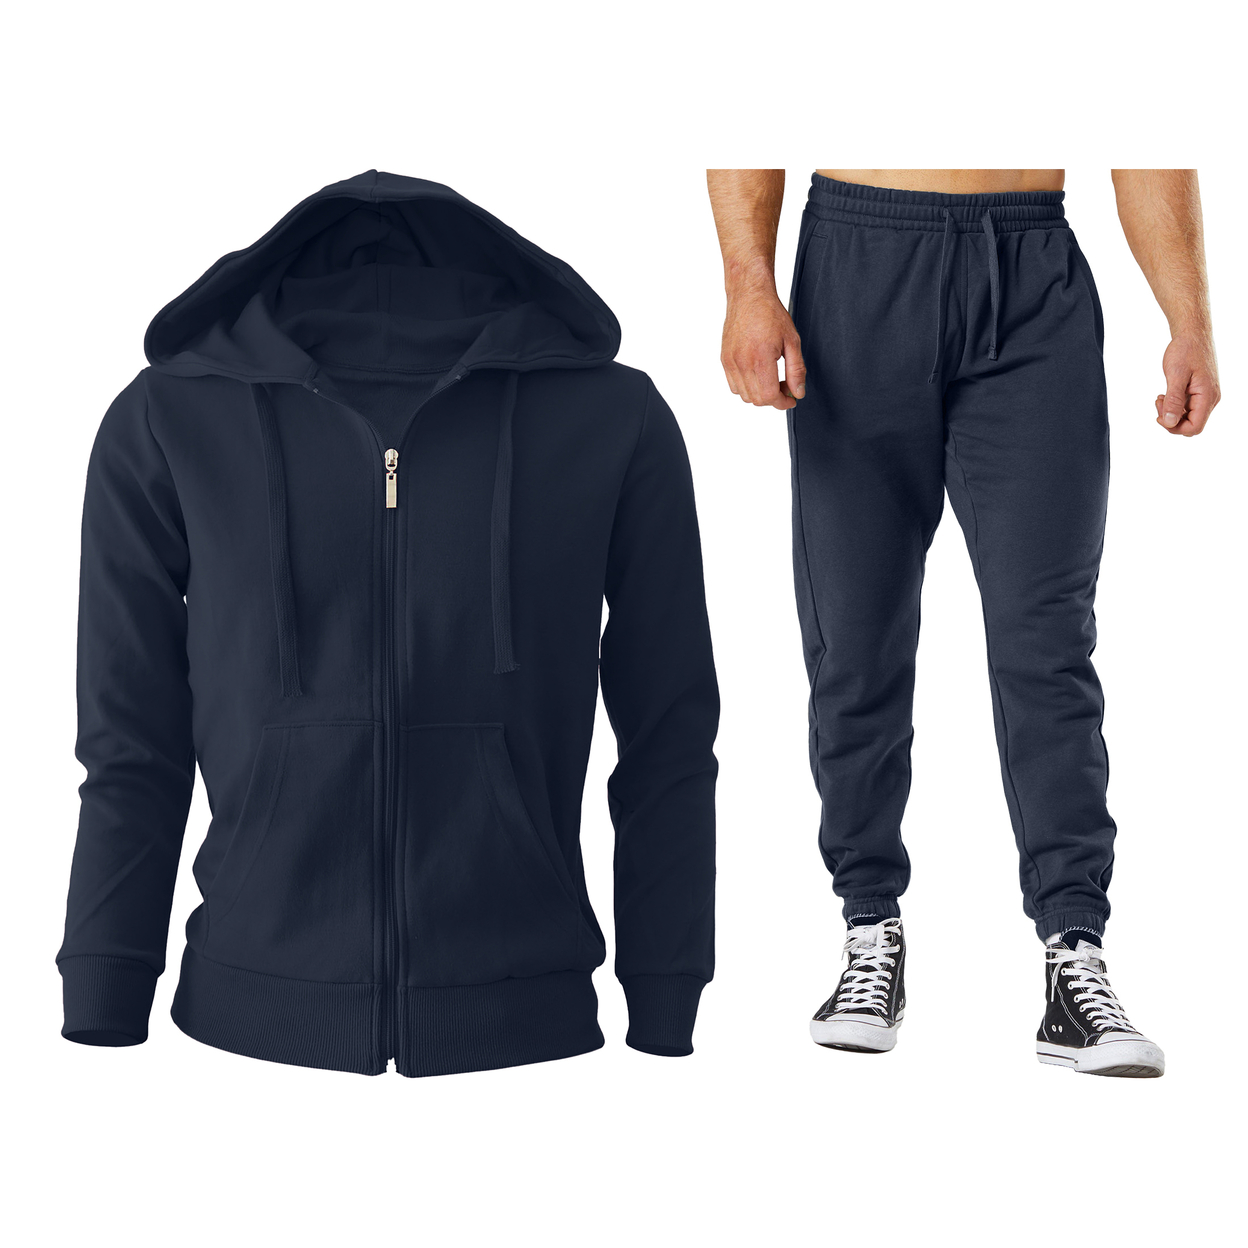 2/4-Piece: Men's Winter Warm Cozy Athletic Multi-Pockets BIG & TALL Sweatsuit Set - Navy, 2, Xx-large